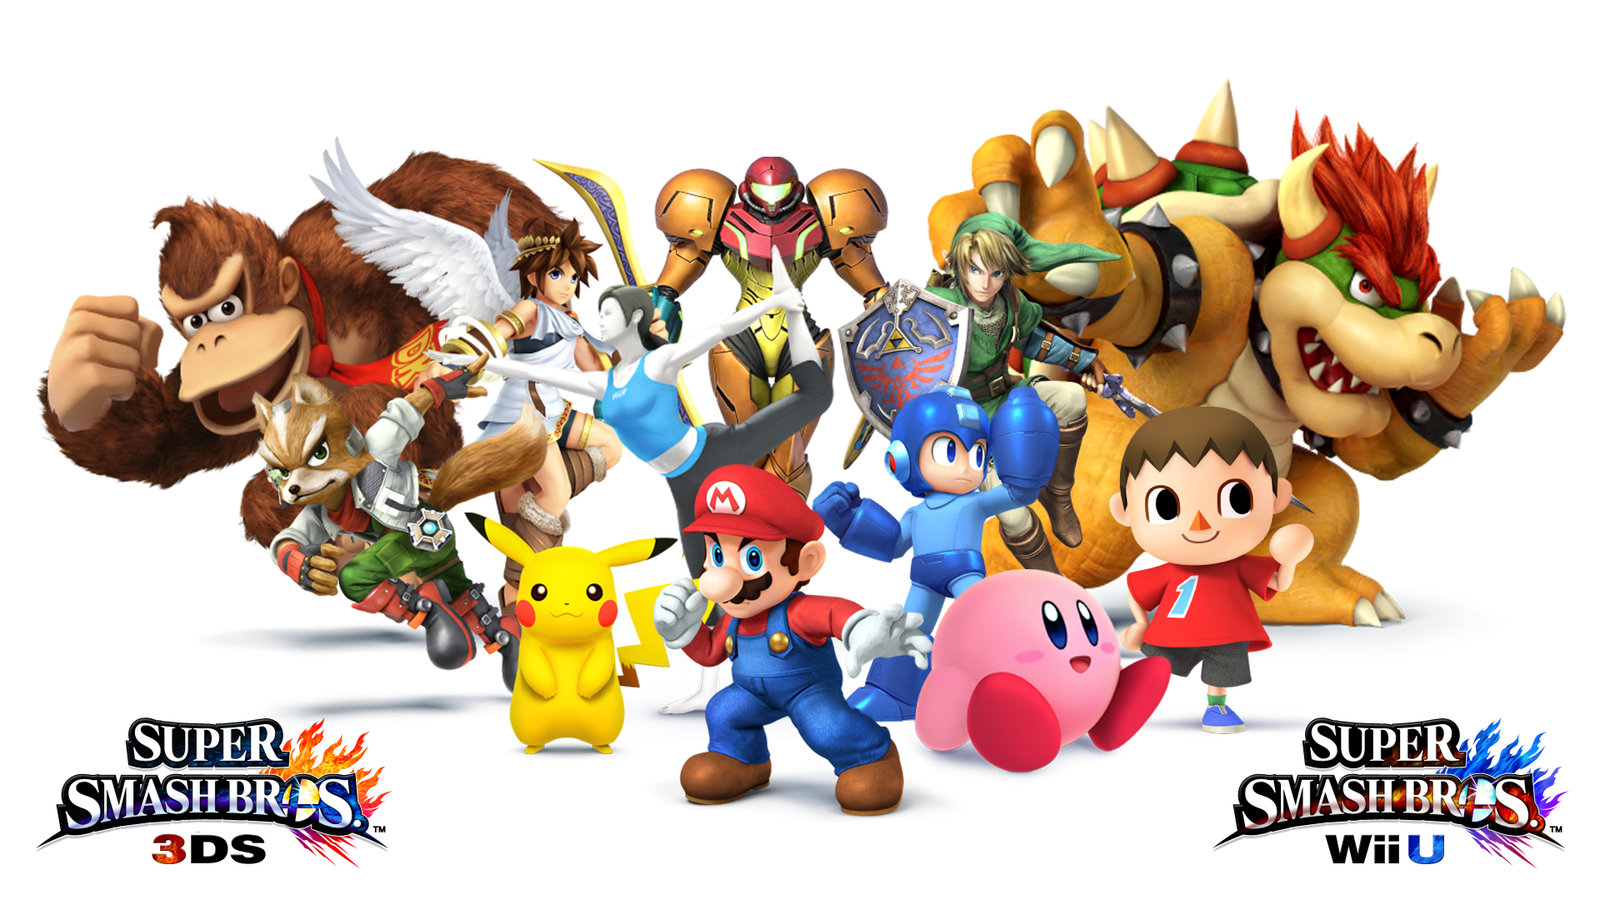 Nintendo NFP Toys to Debut for Super Smash Bros. on Wii U